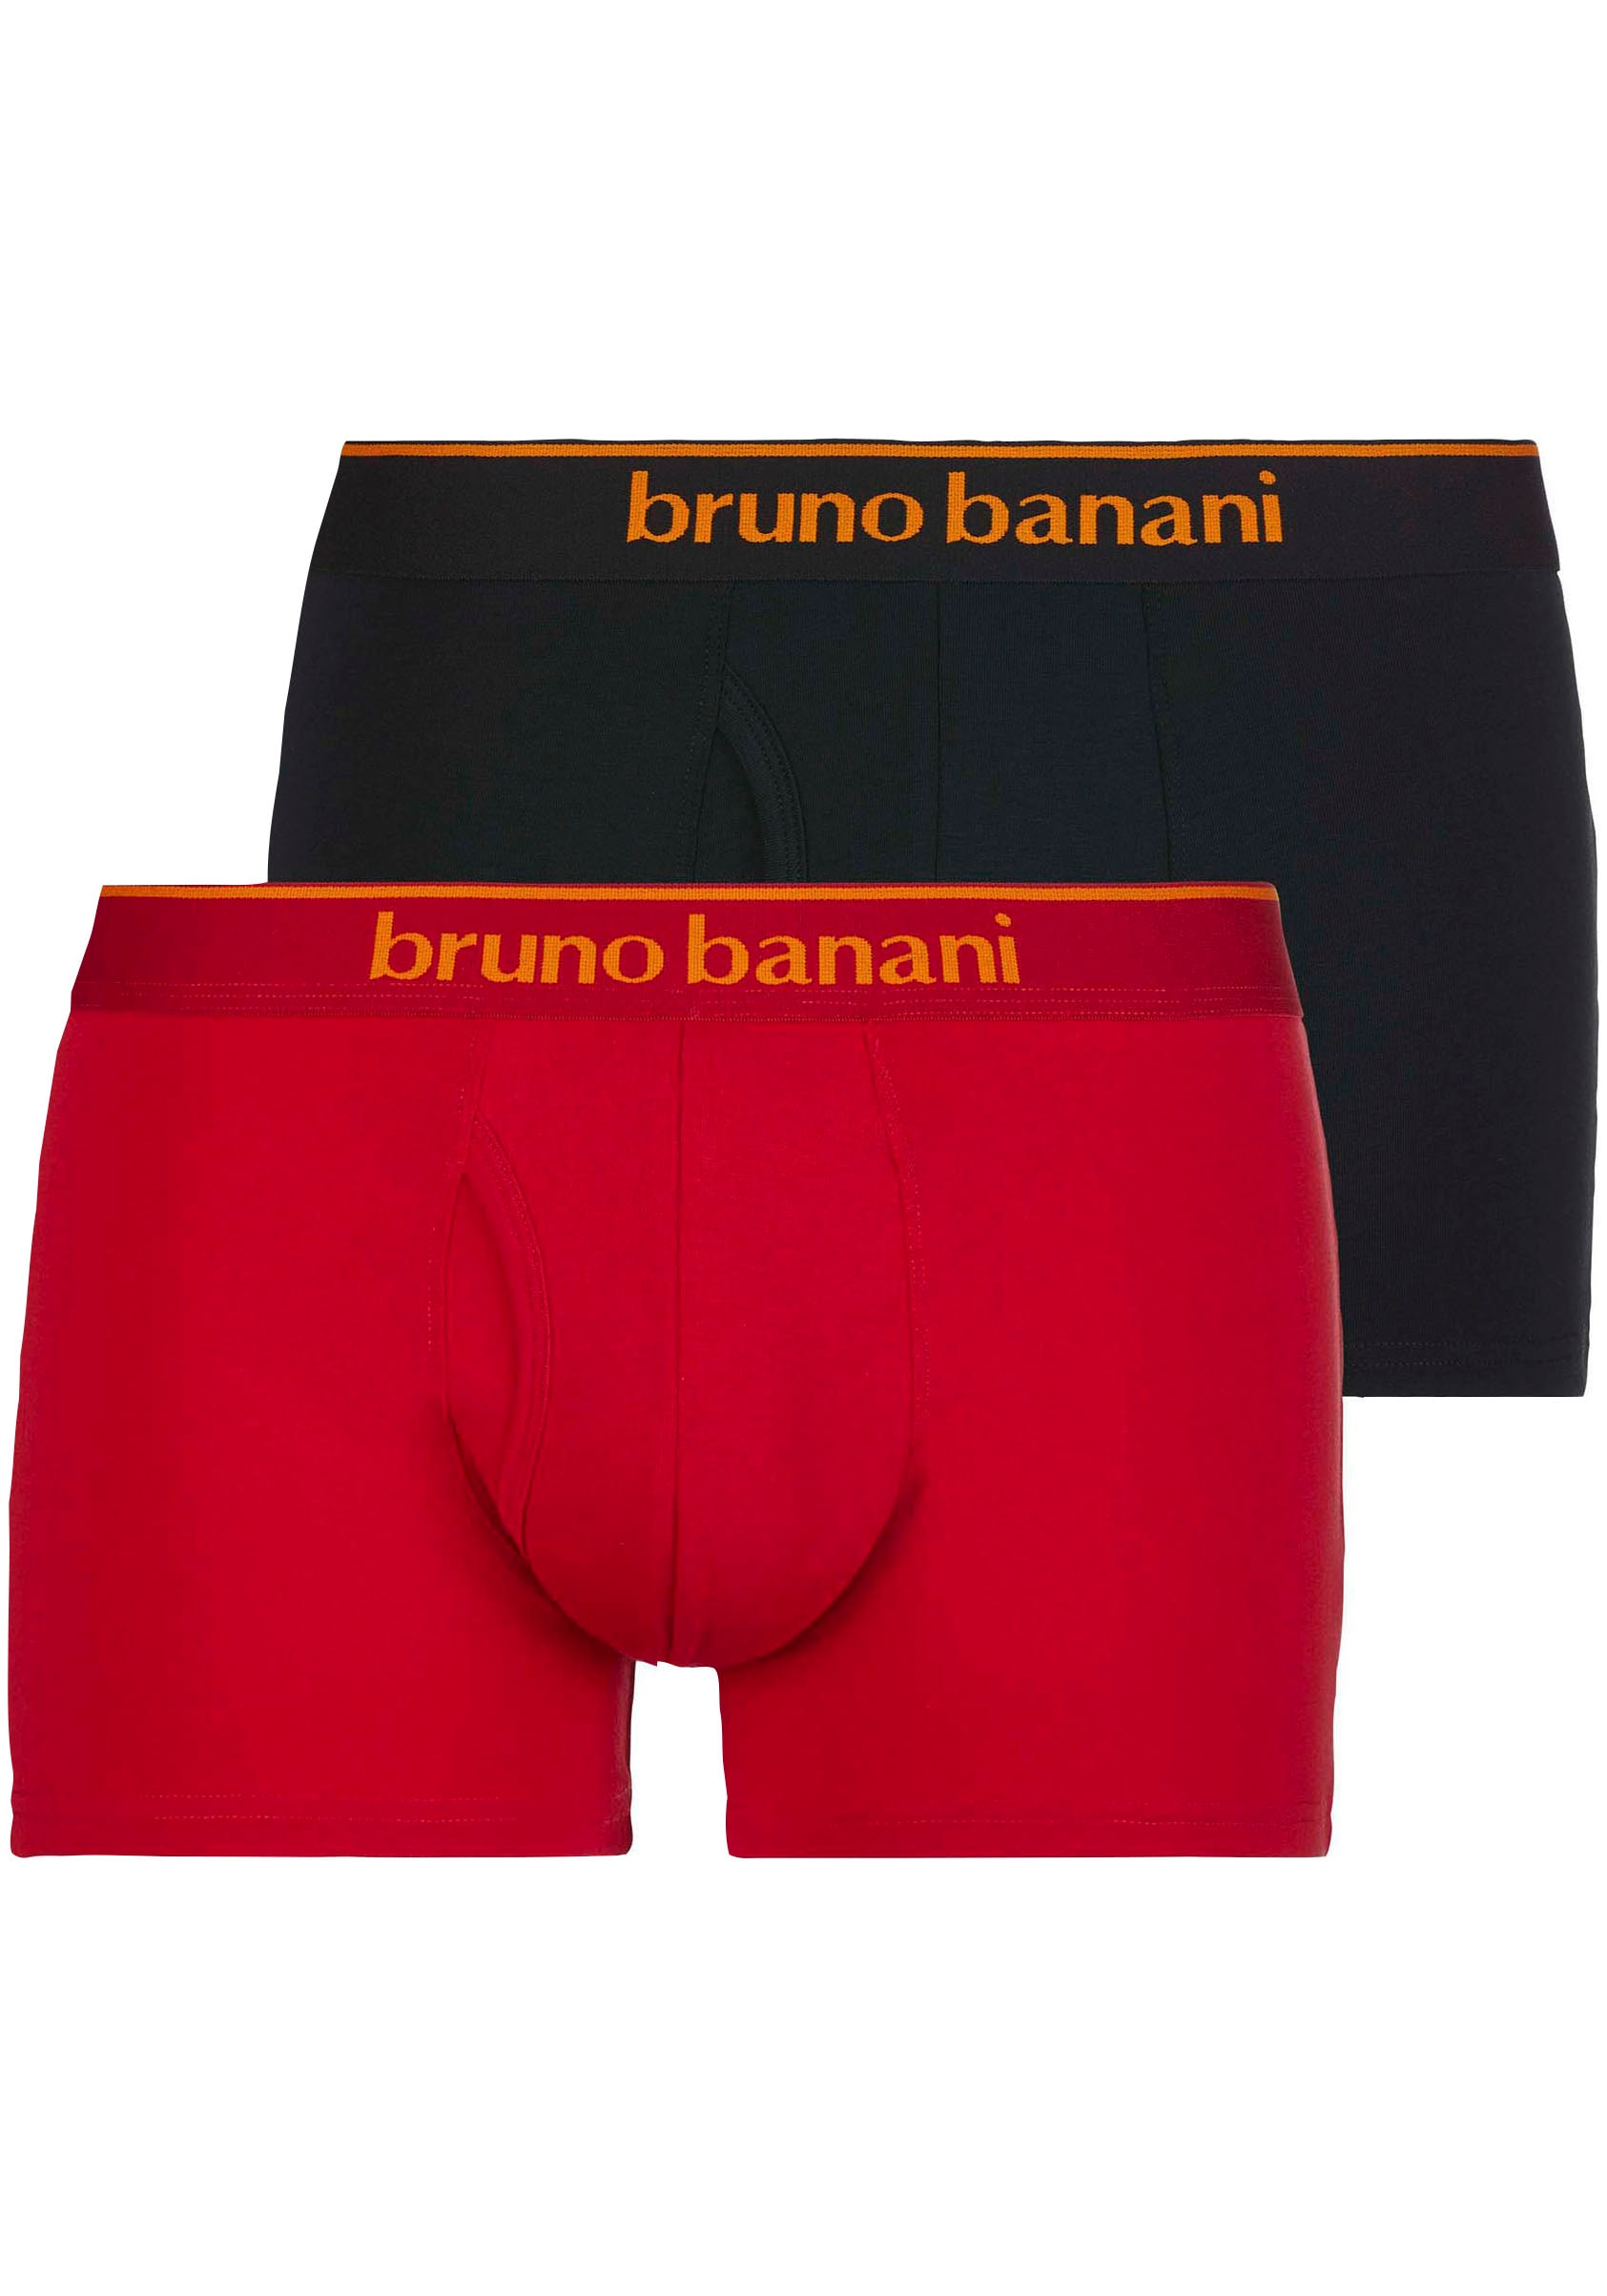 ♕ Bruno »Short Boxershorts St.), Kontrastfarbene Quick Access«, Details 2Pack (Packung, bei 2 Banani